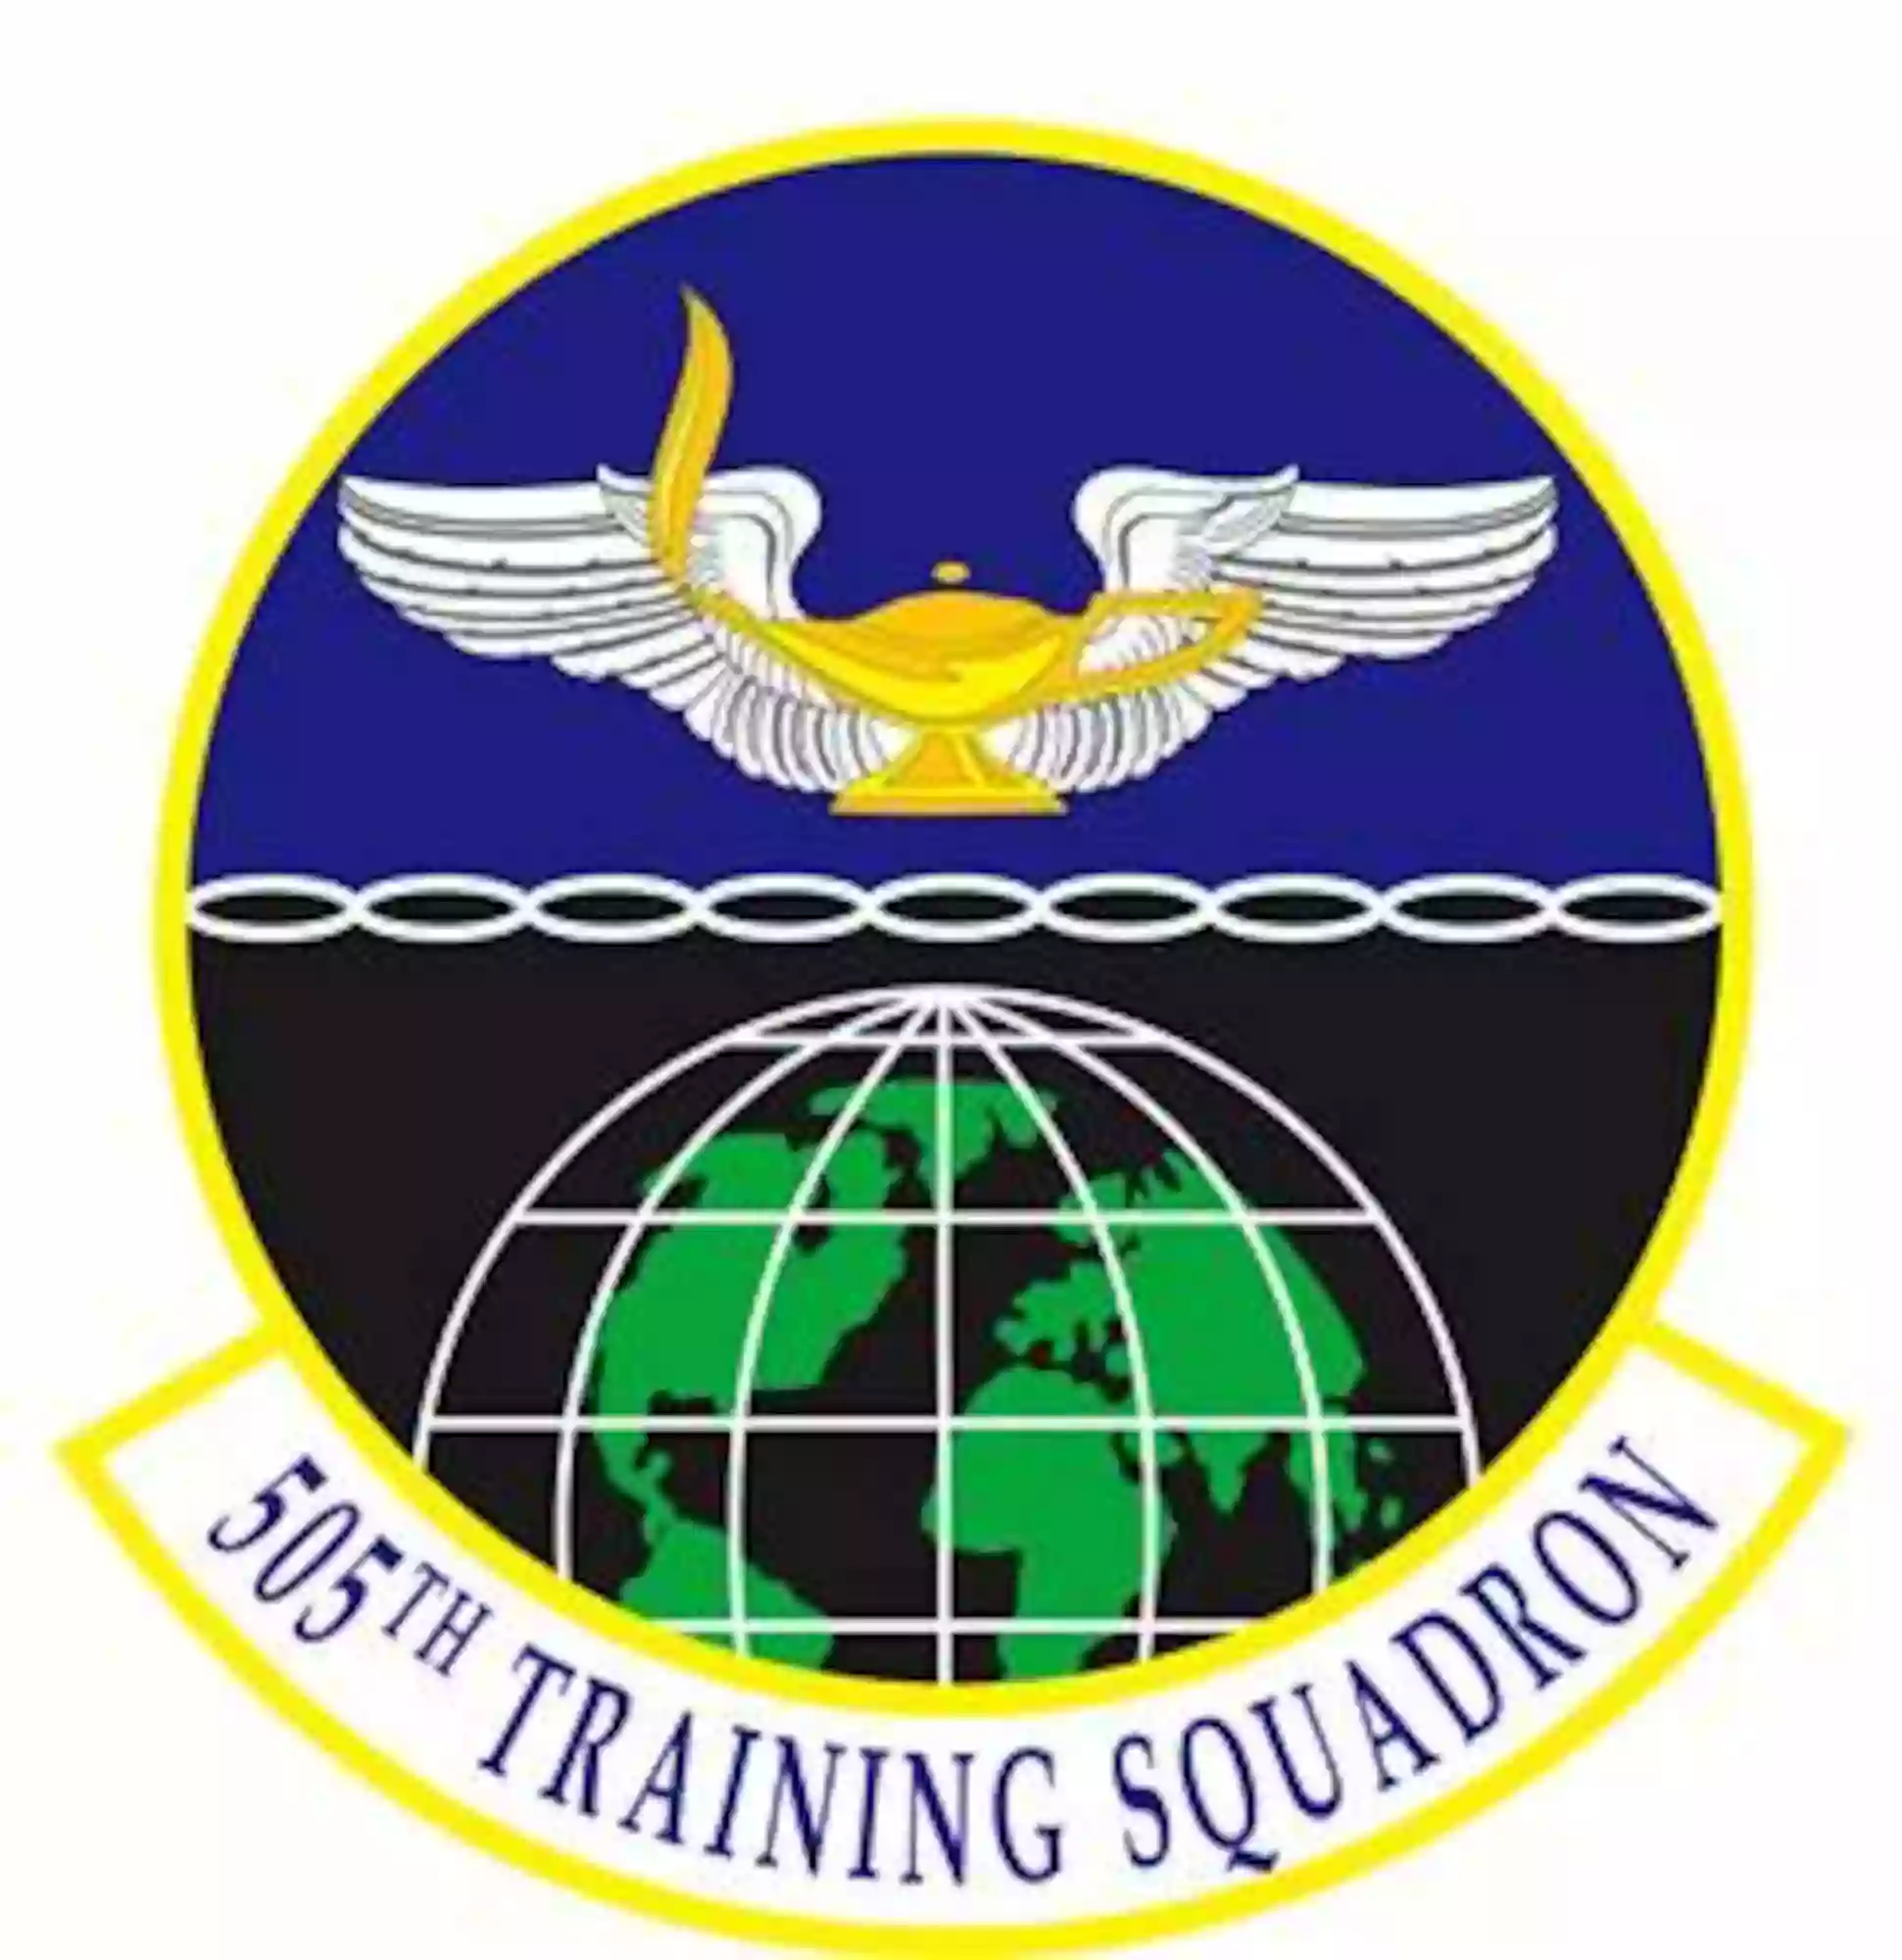 505 Training Squadron